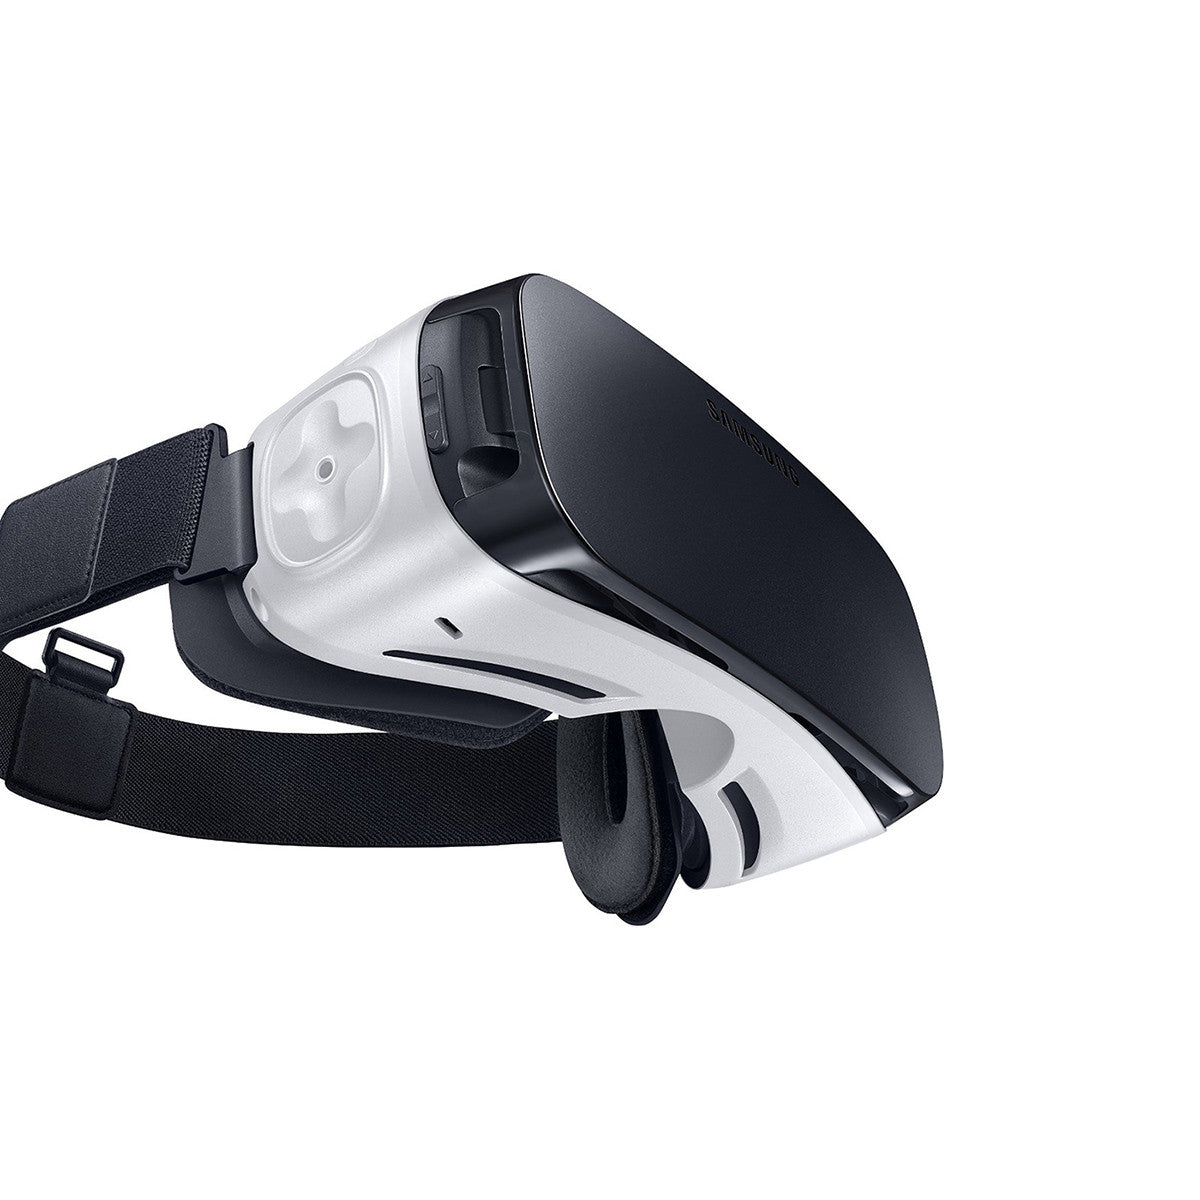 Samsung Gear VR Vituarl Reality